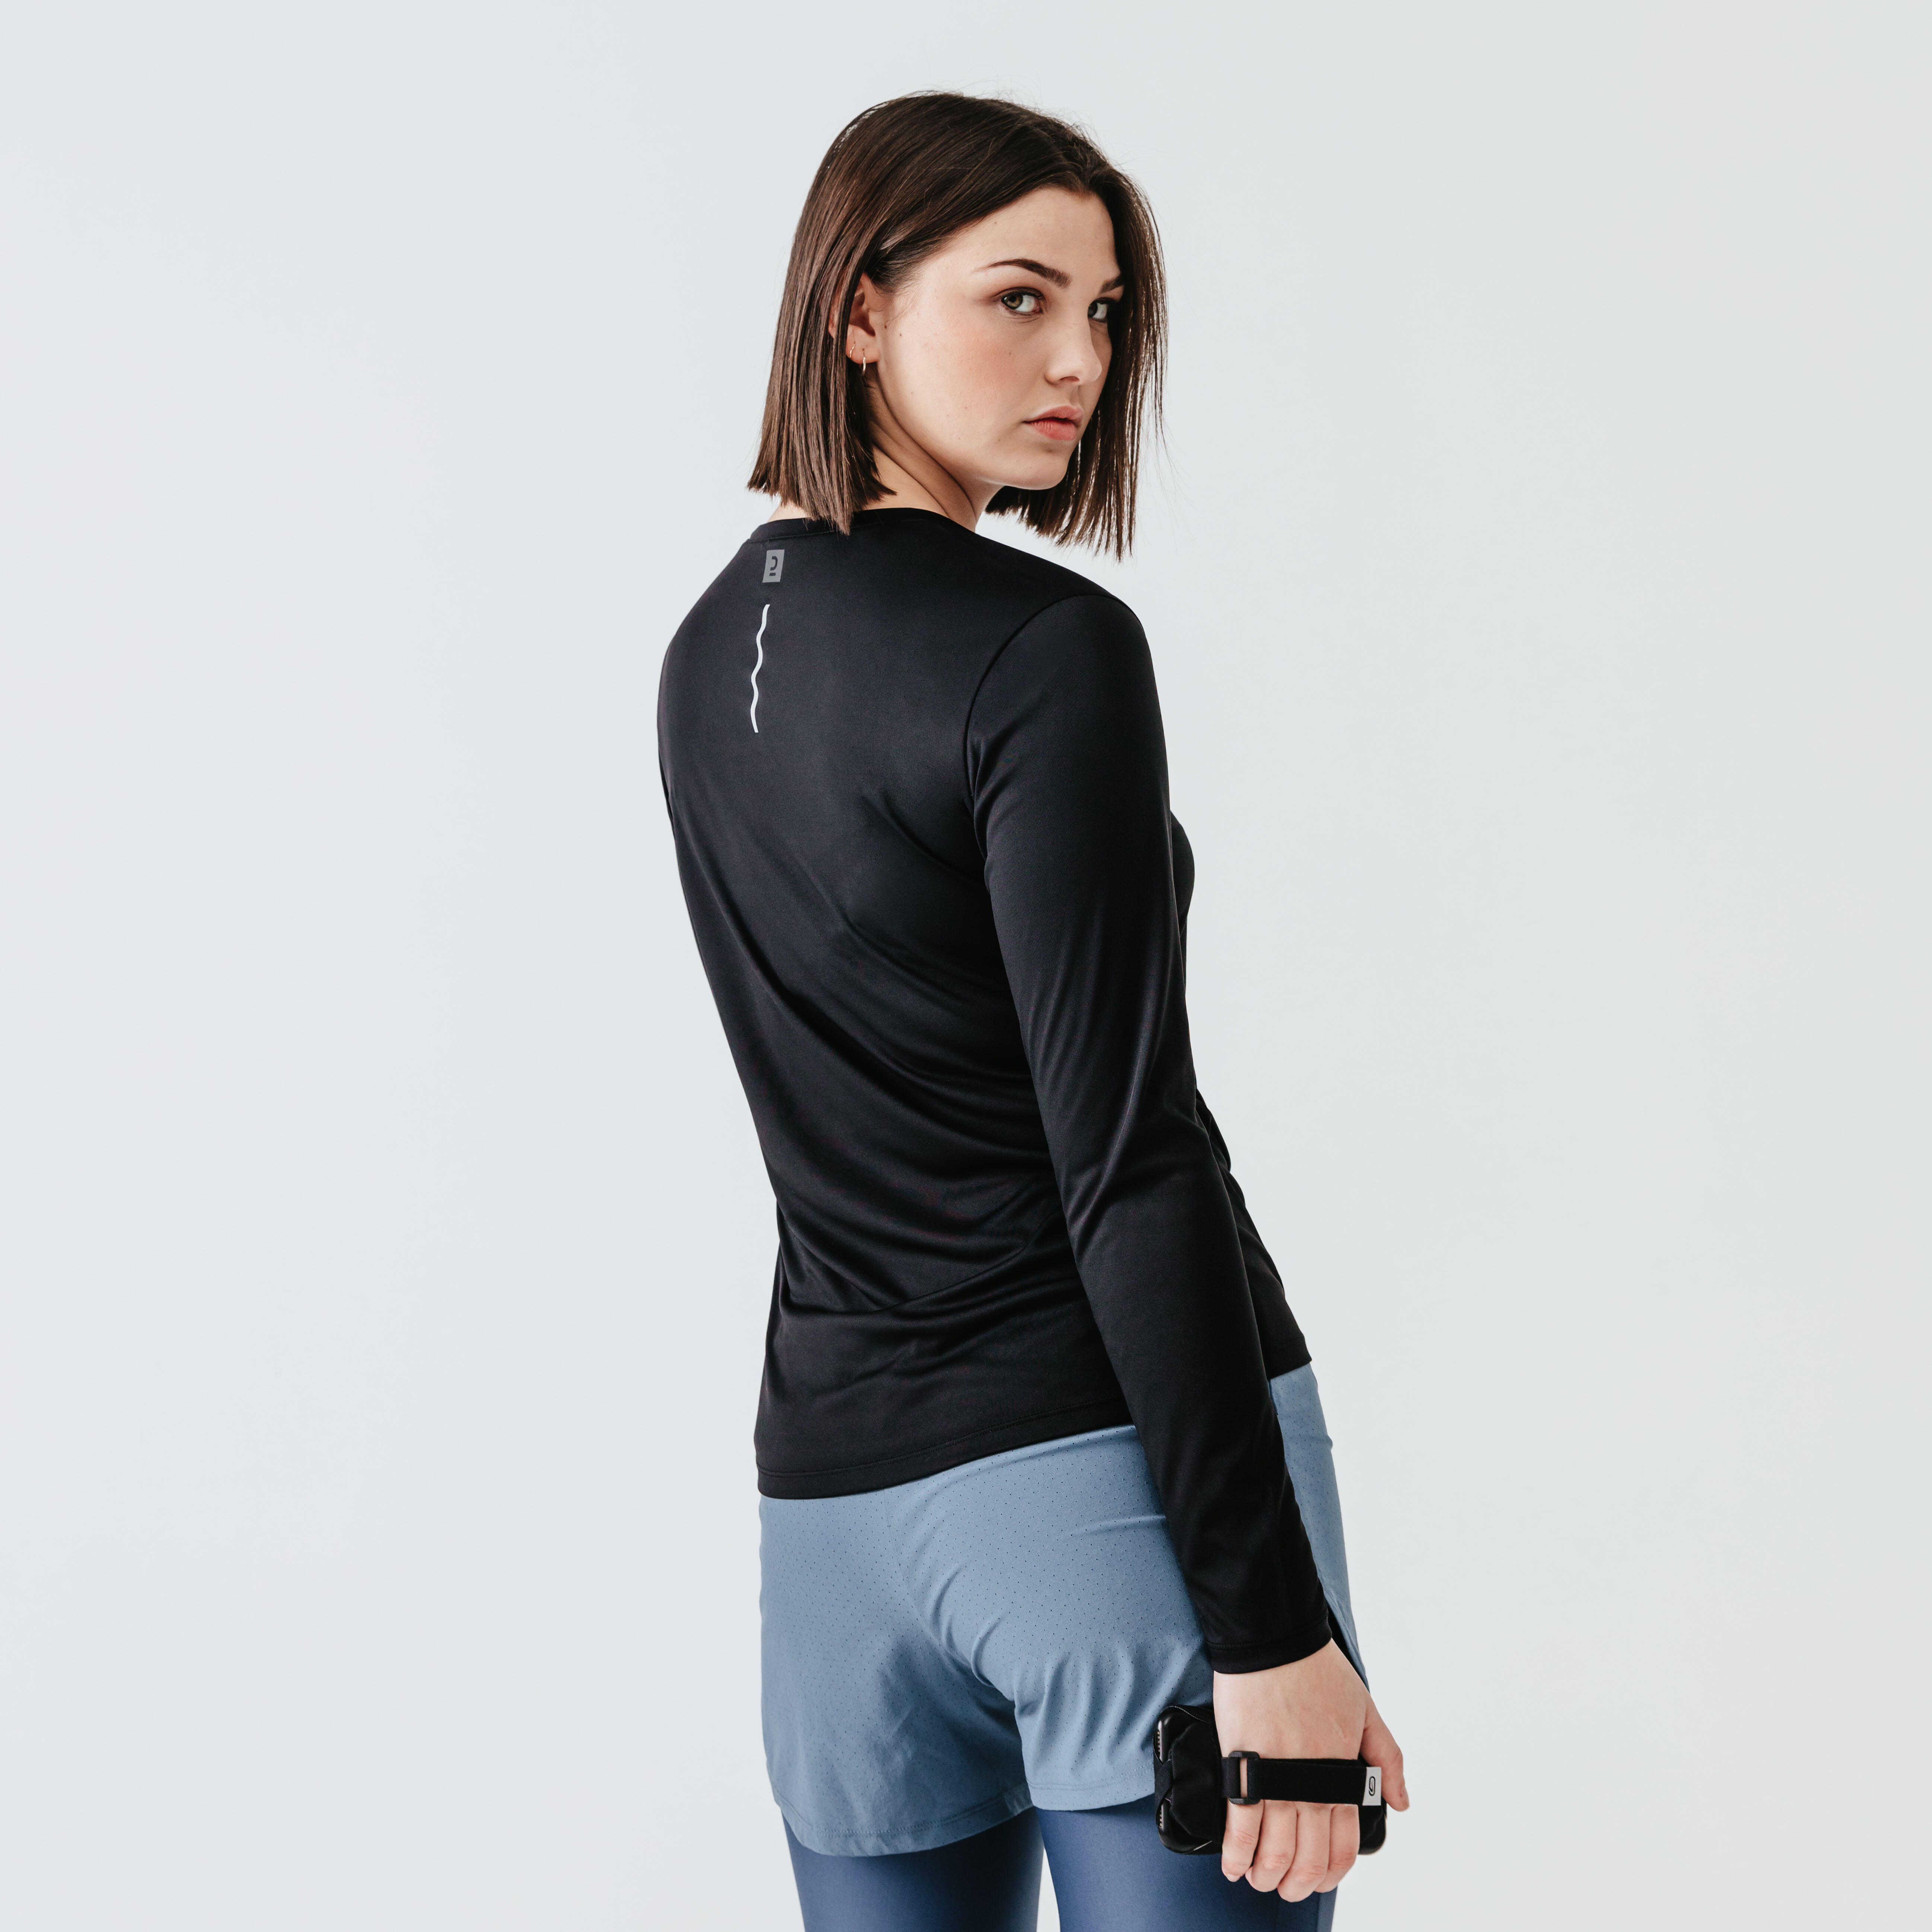 Women Long-Sleeved Running T-Shirt Sun Protect - Black